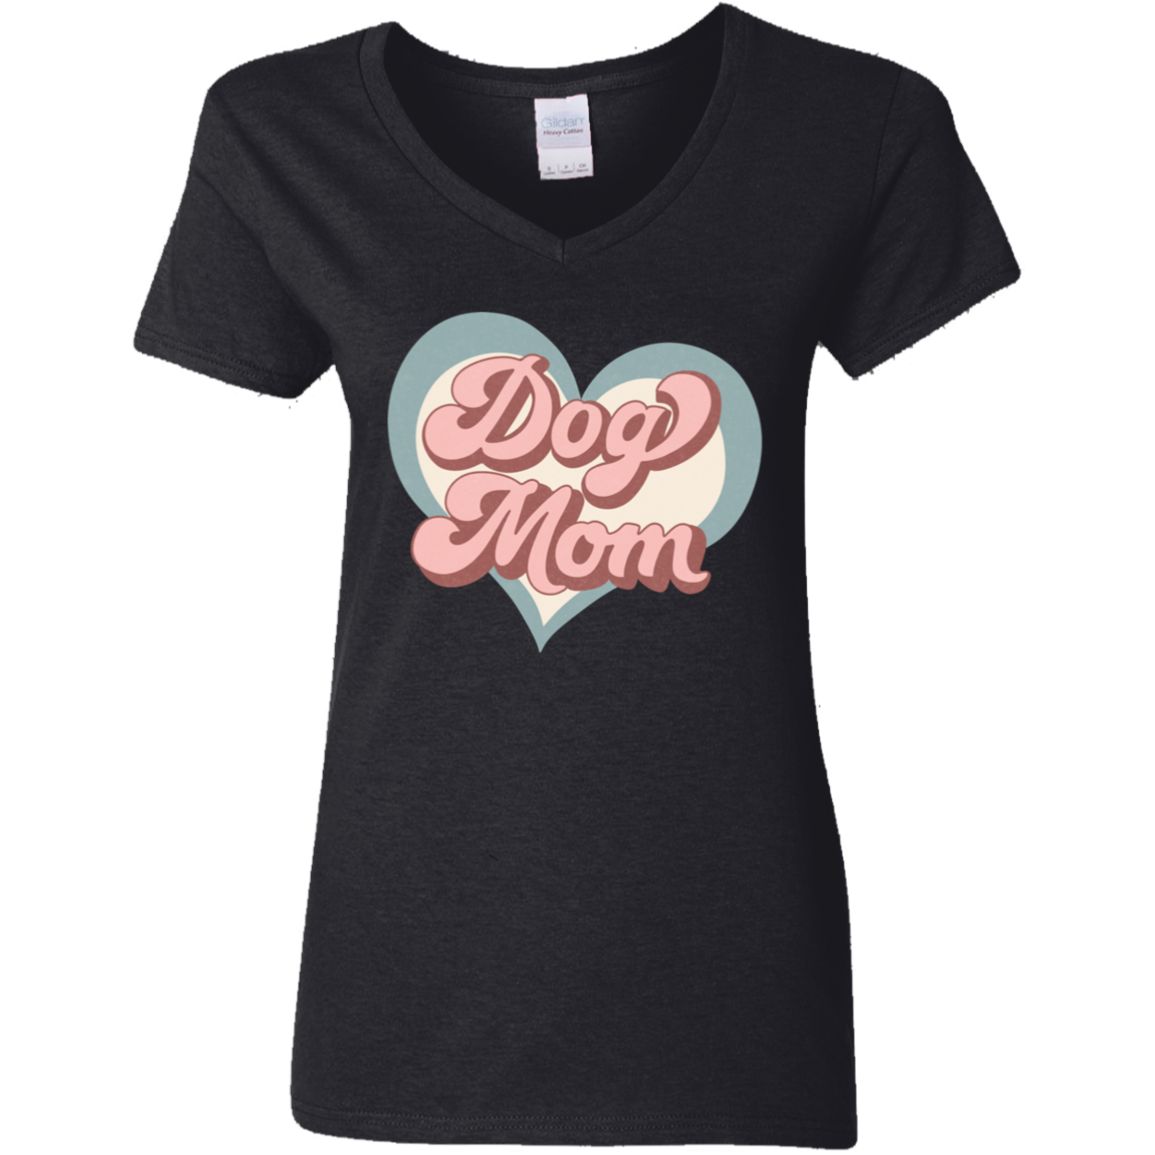 Dog Mom Retro Print with Hearts Ladies' V-Neck T-Shirt